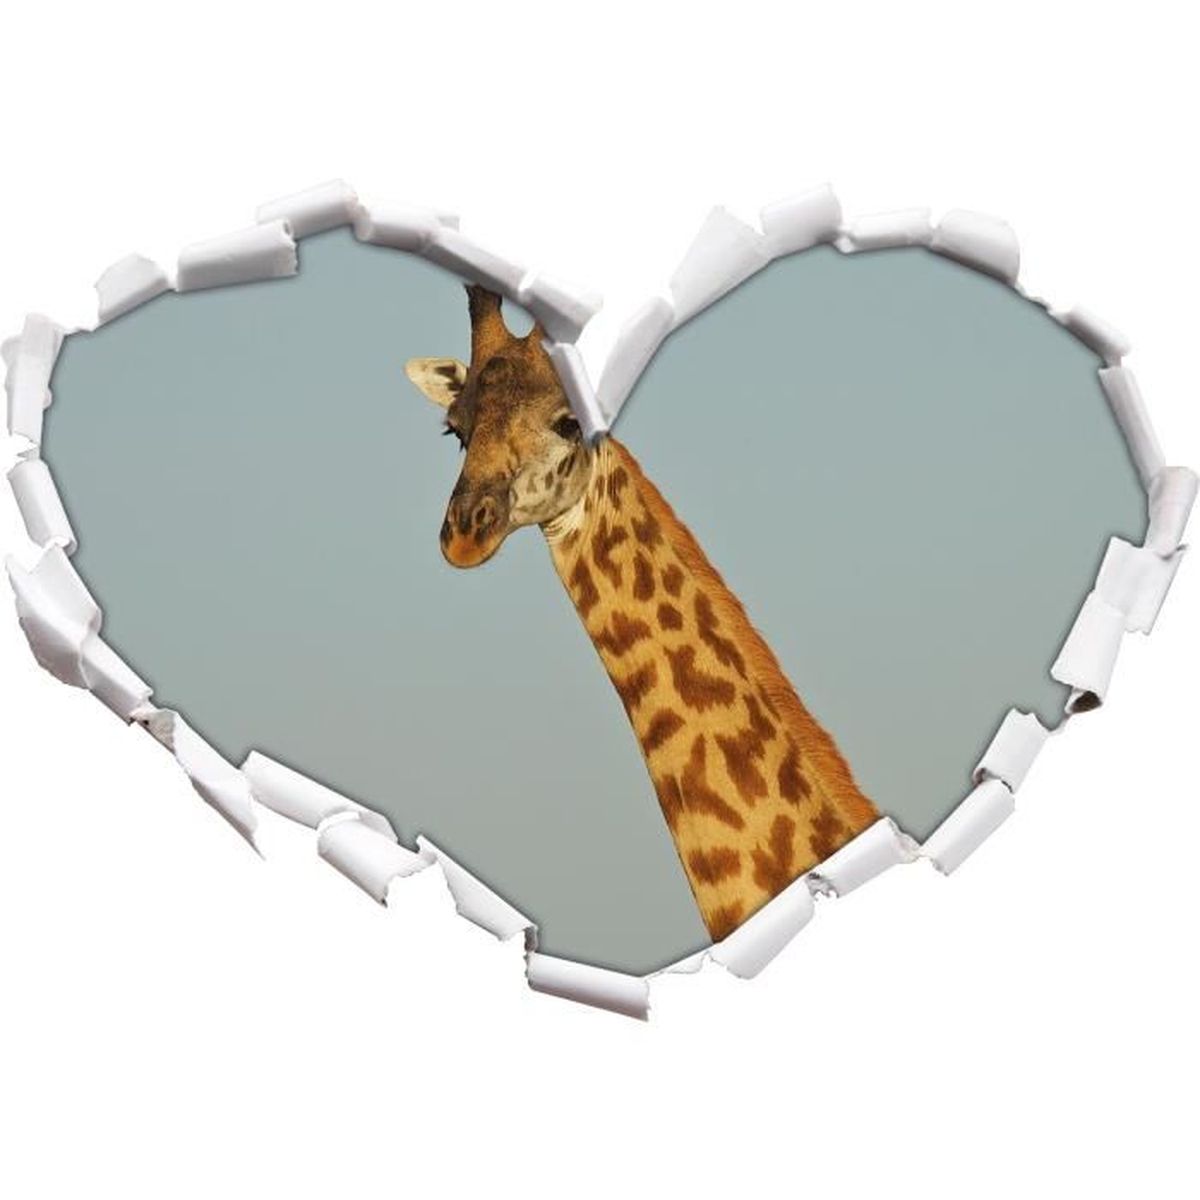 Les parcs en webcam live  - Page 14 Forme-de-coeur-maiestatische-girafe-dans-le-regard